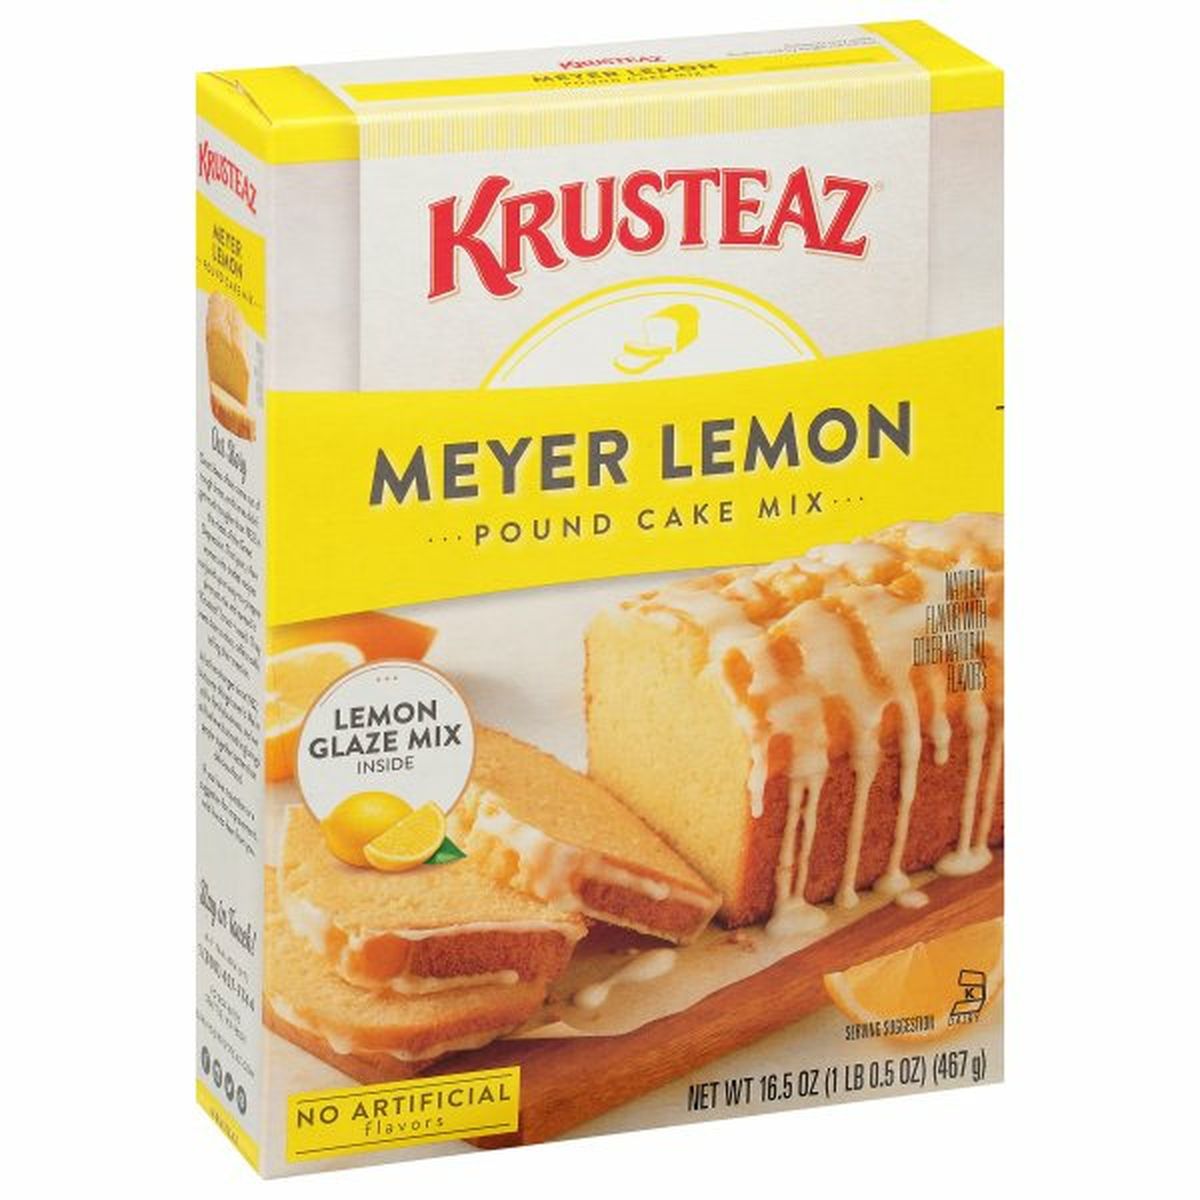 Calories in Krusteaz Pound Cake Mix, Meyer Lemon